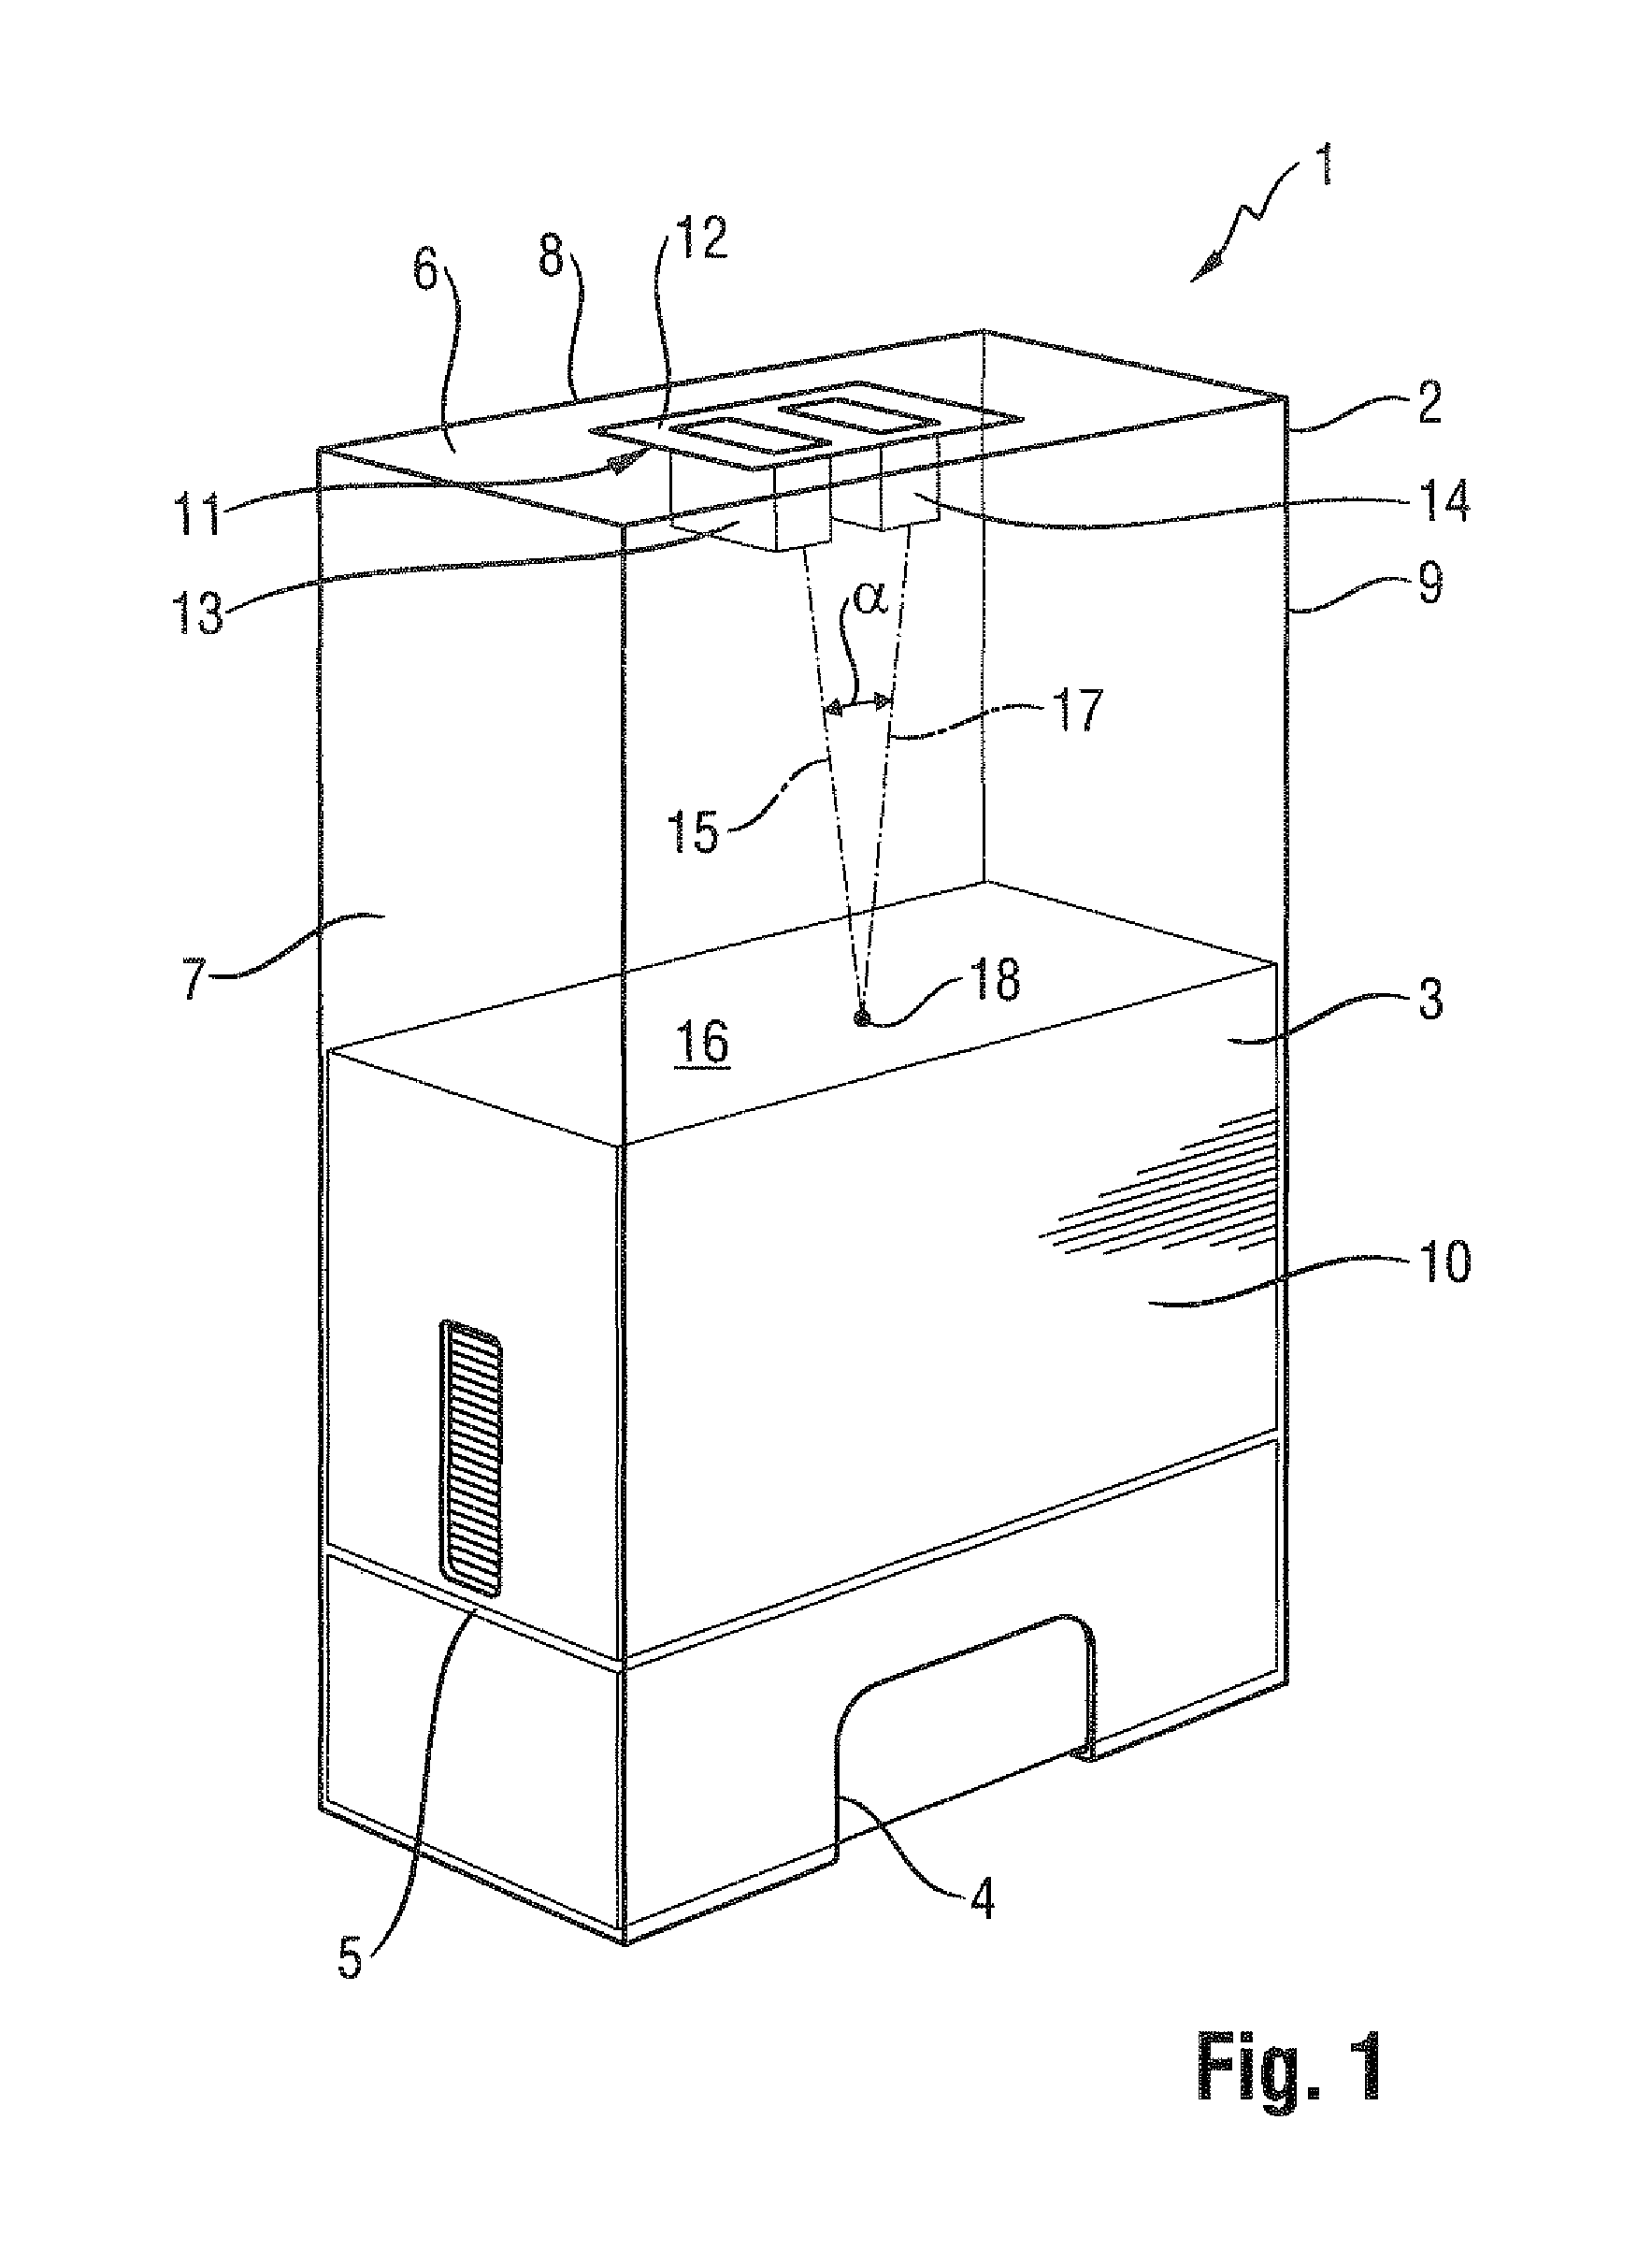 Product Level Sensor for a Product Dispenser